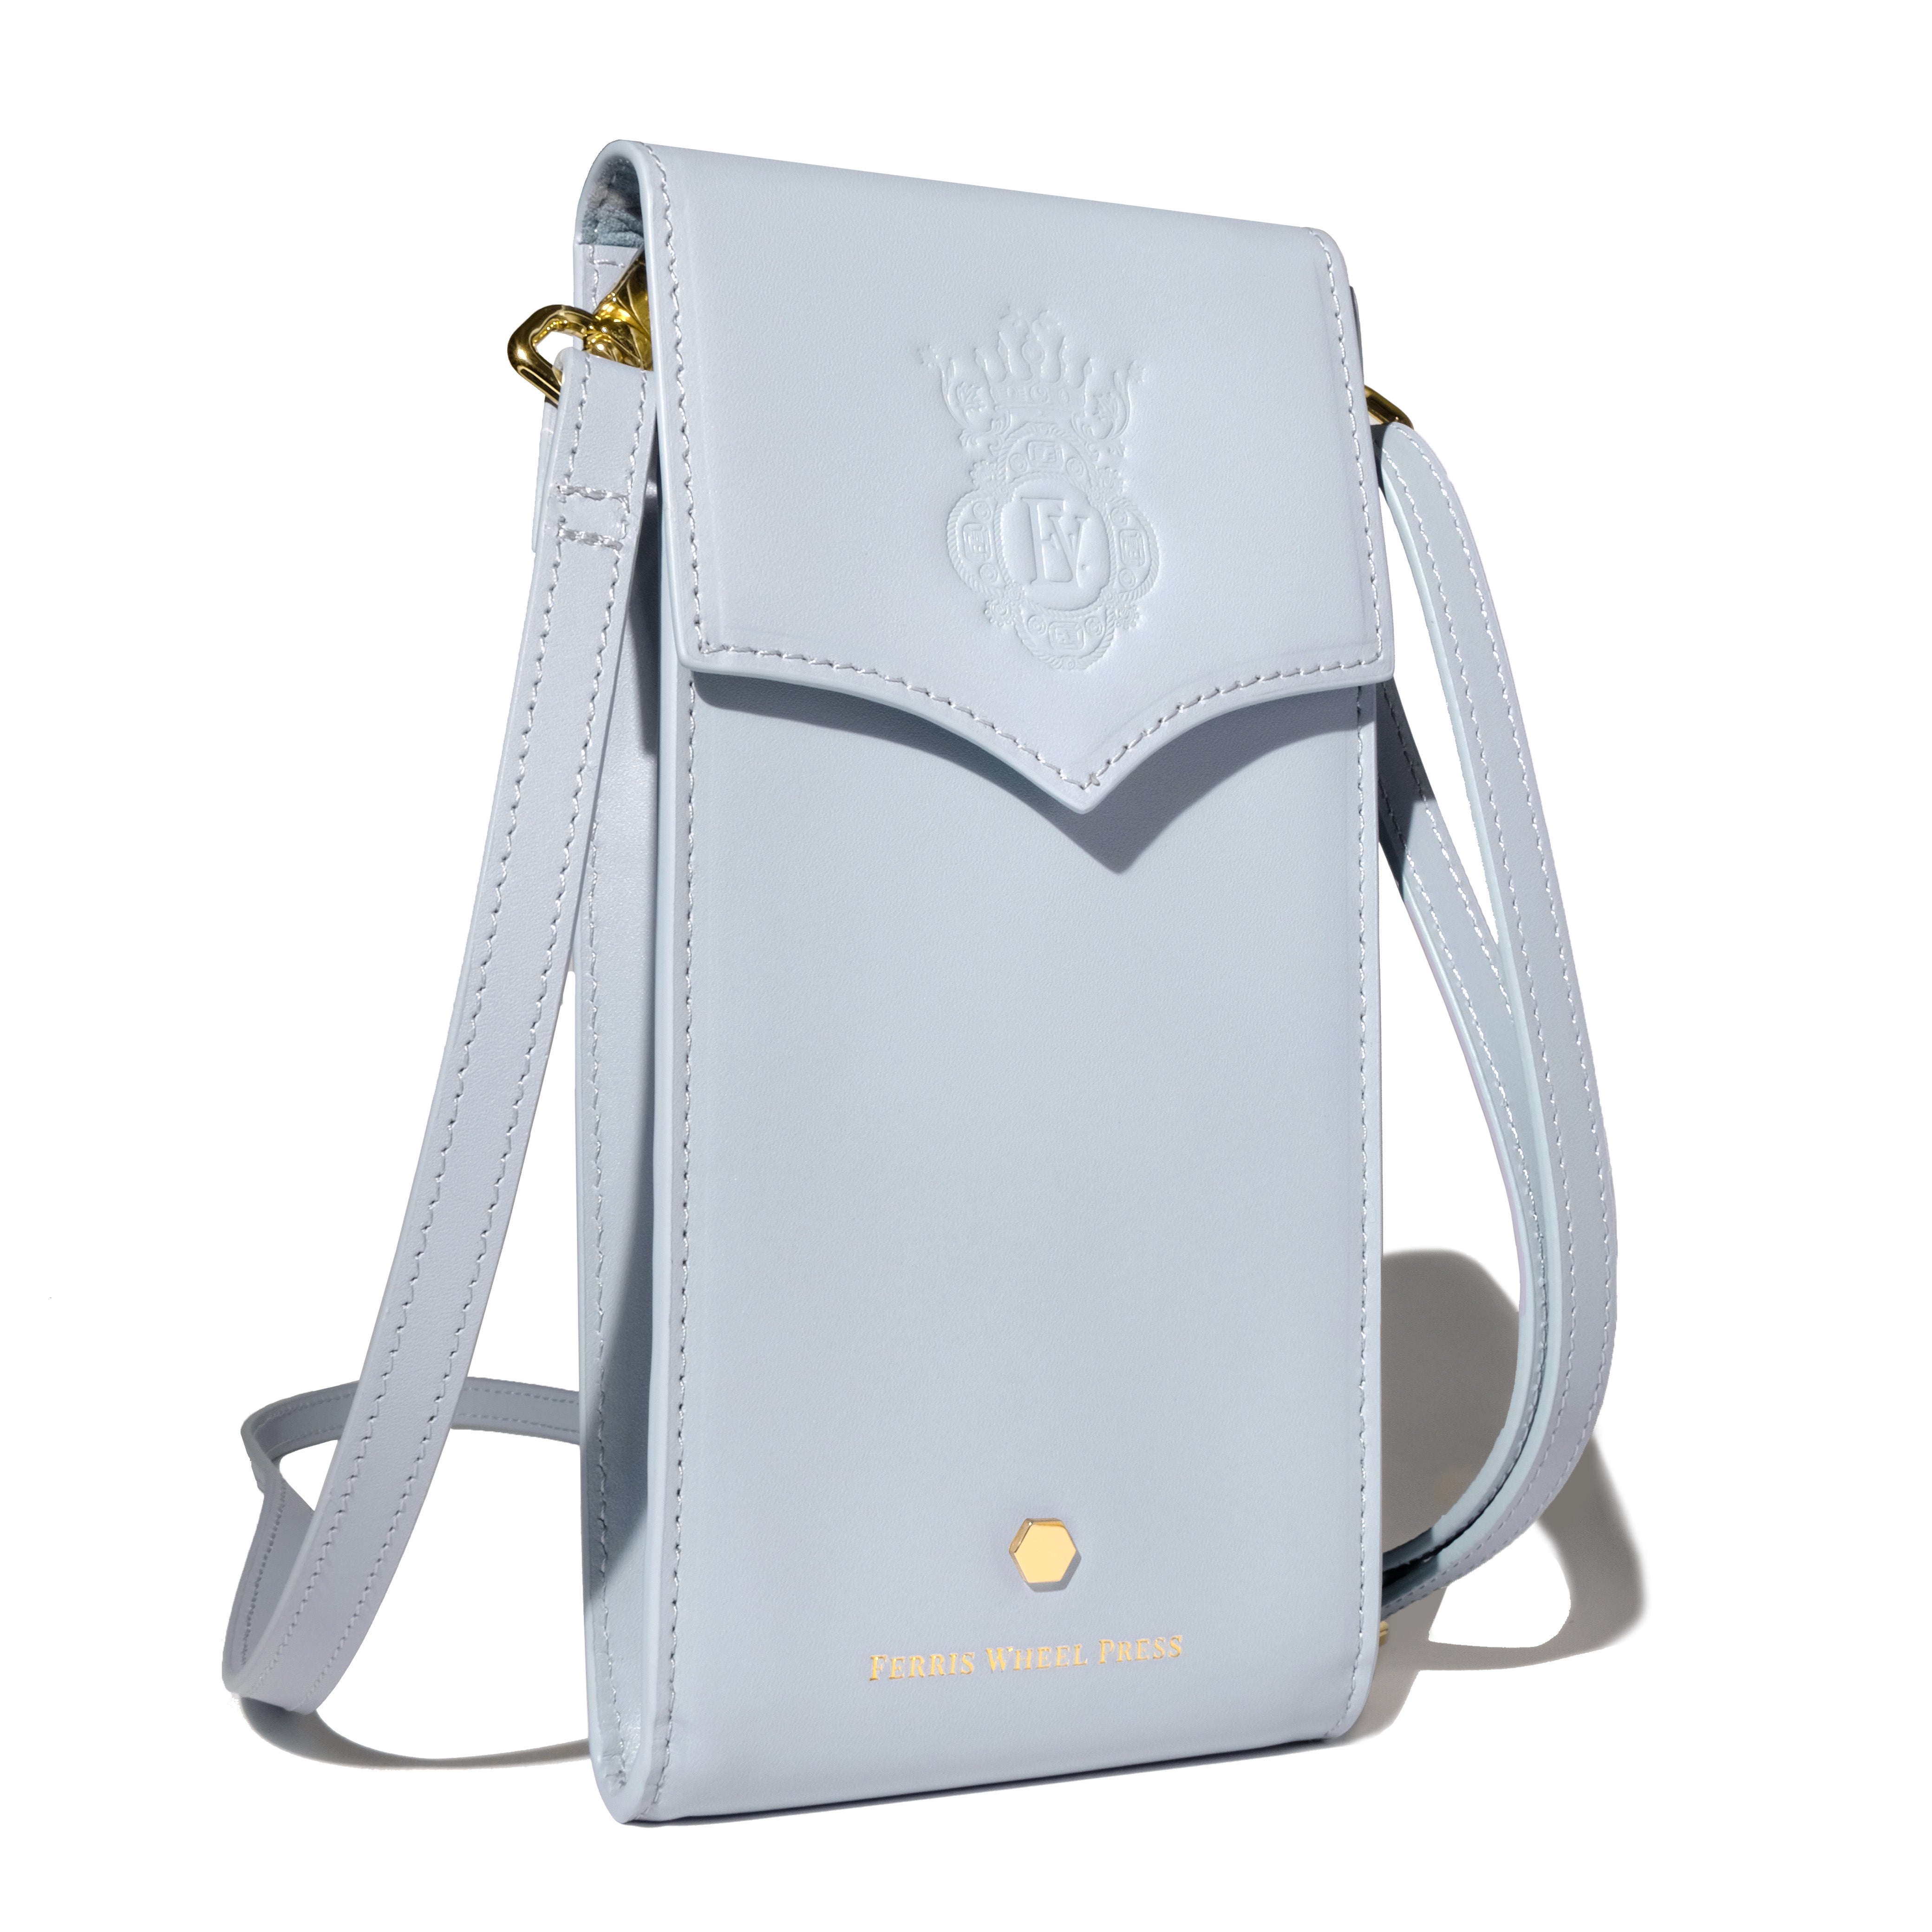 Coach Leather bag / Purse / light blue / zipper / Great shape | eBay